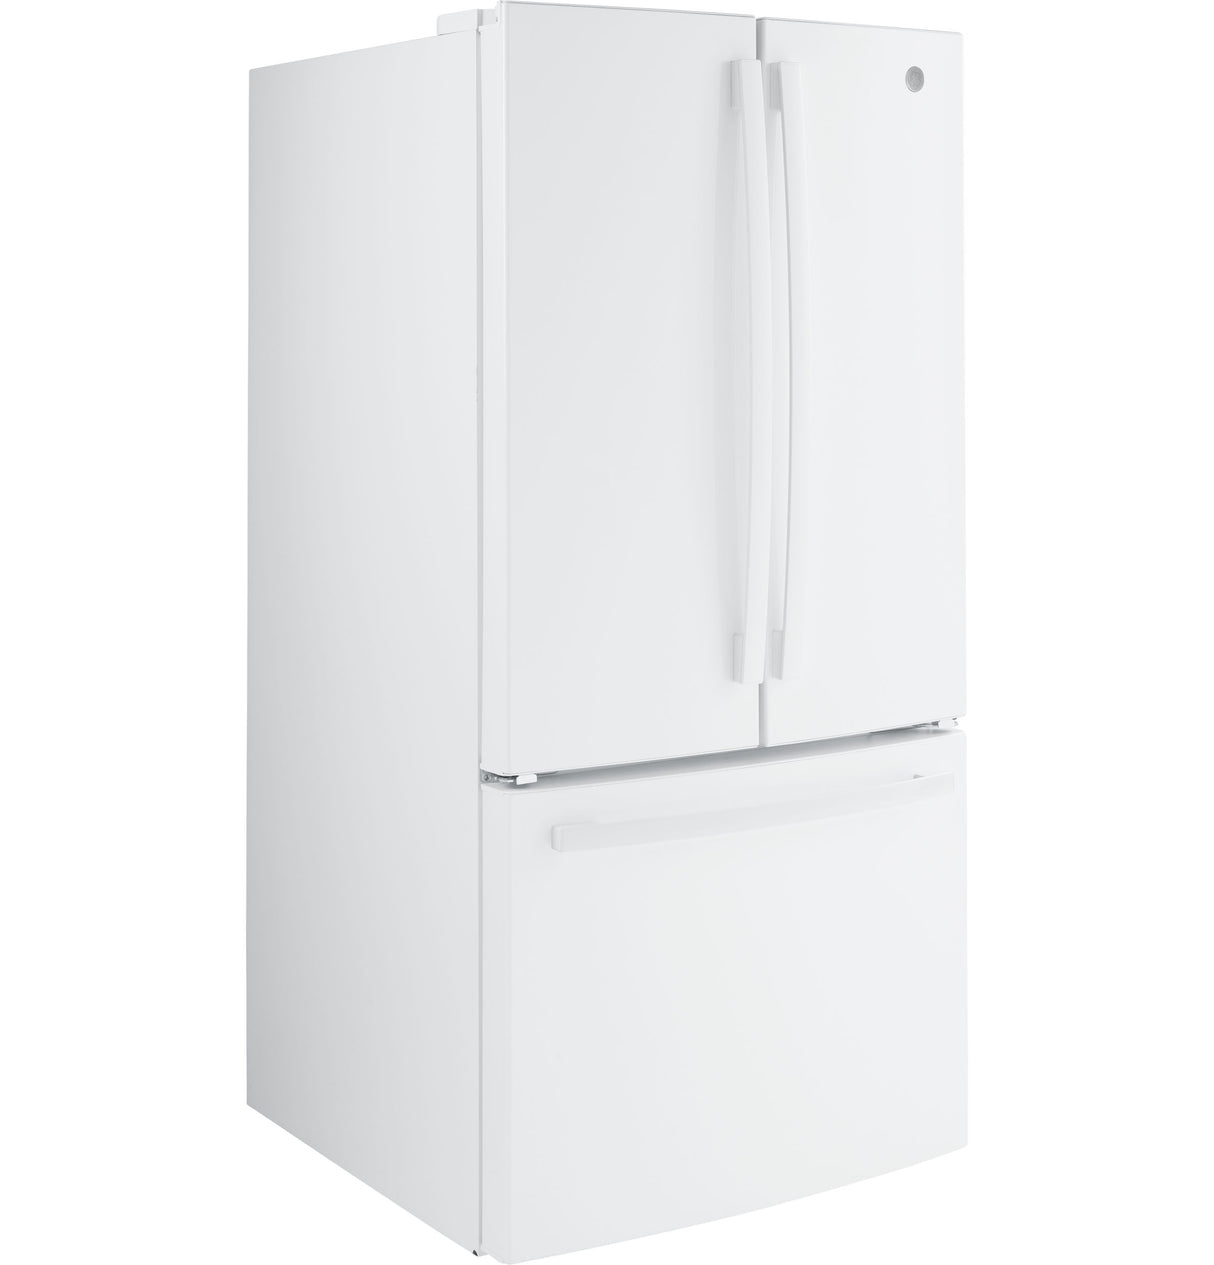 GE(R) ENERGY STAR(R) 24.7 Cu. Ft. French-Door Refrigerator - (GNE25JGKWW)